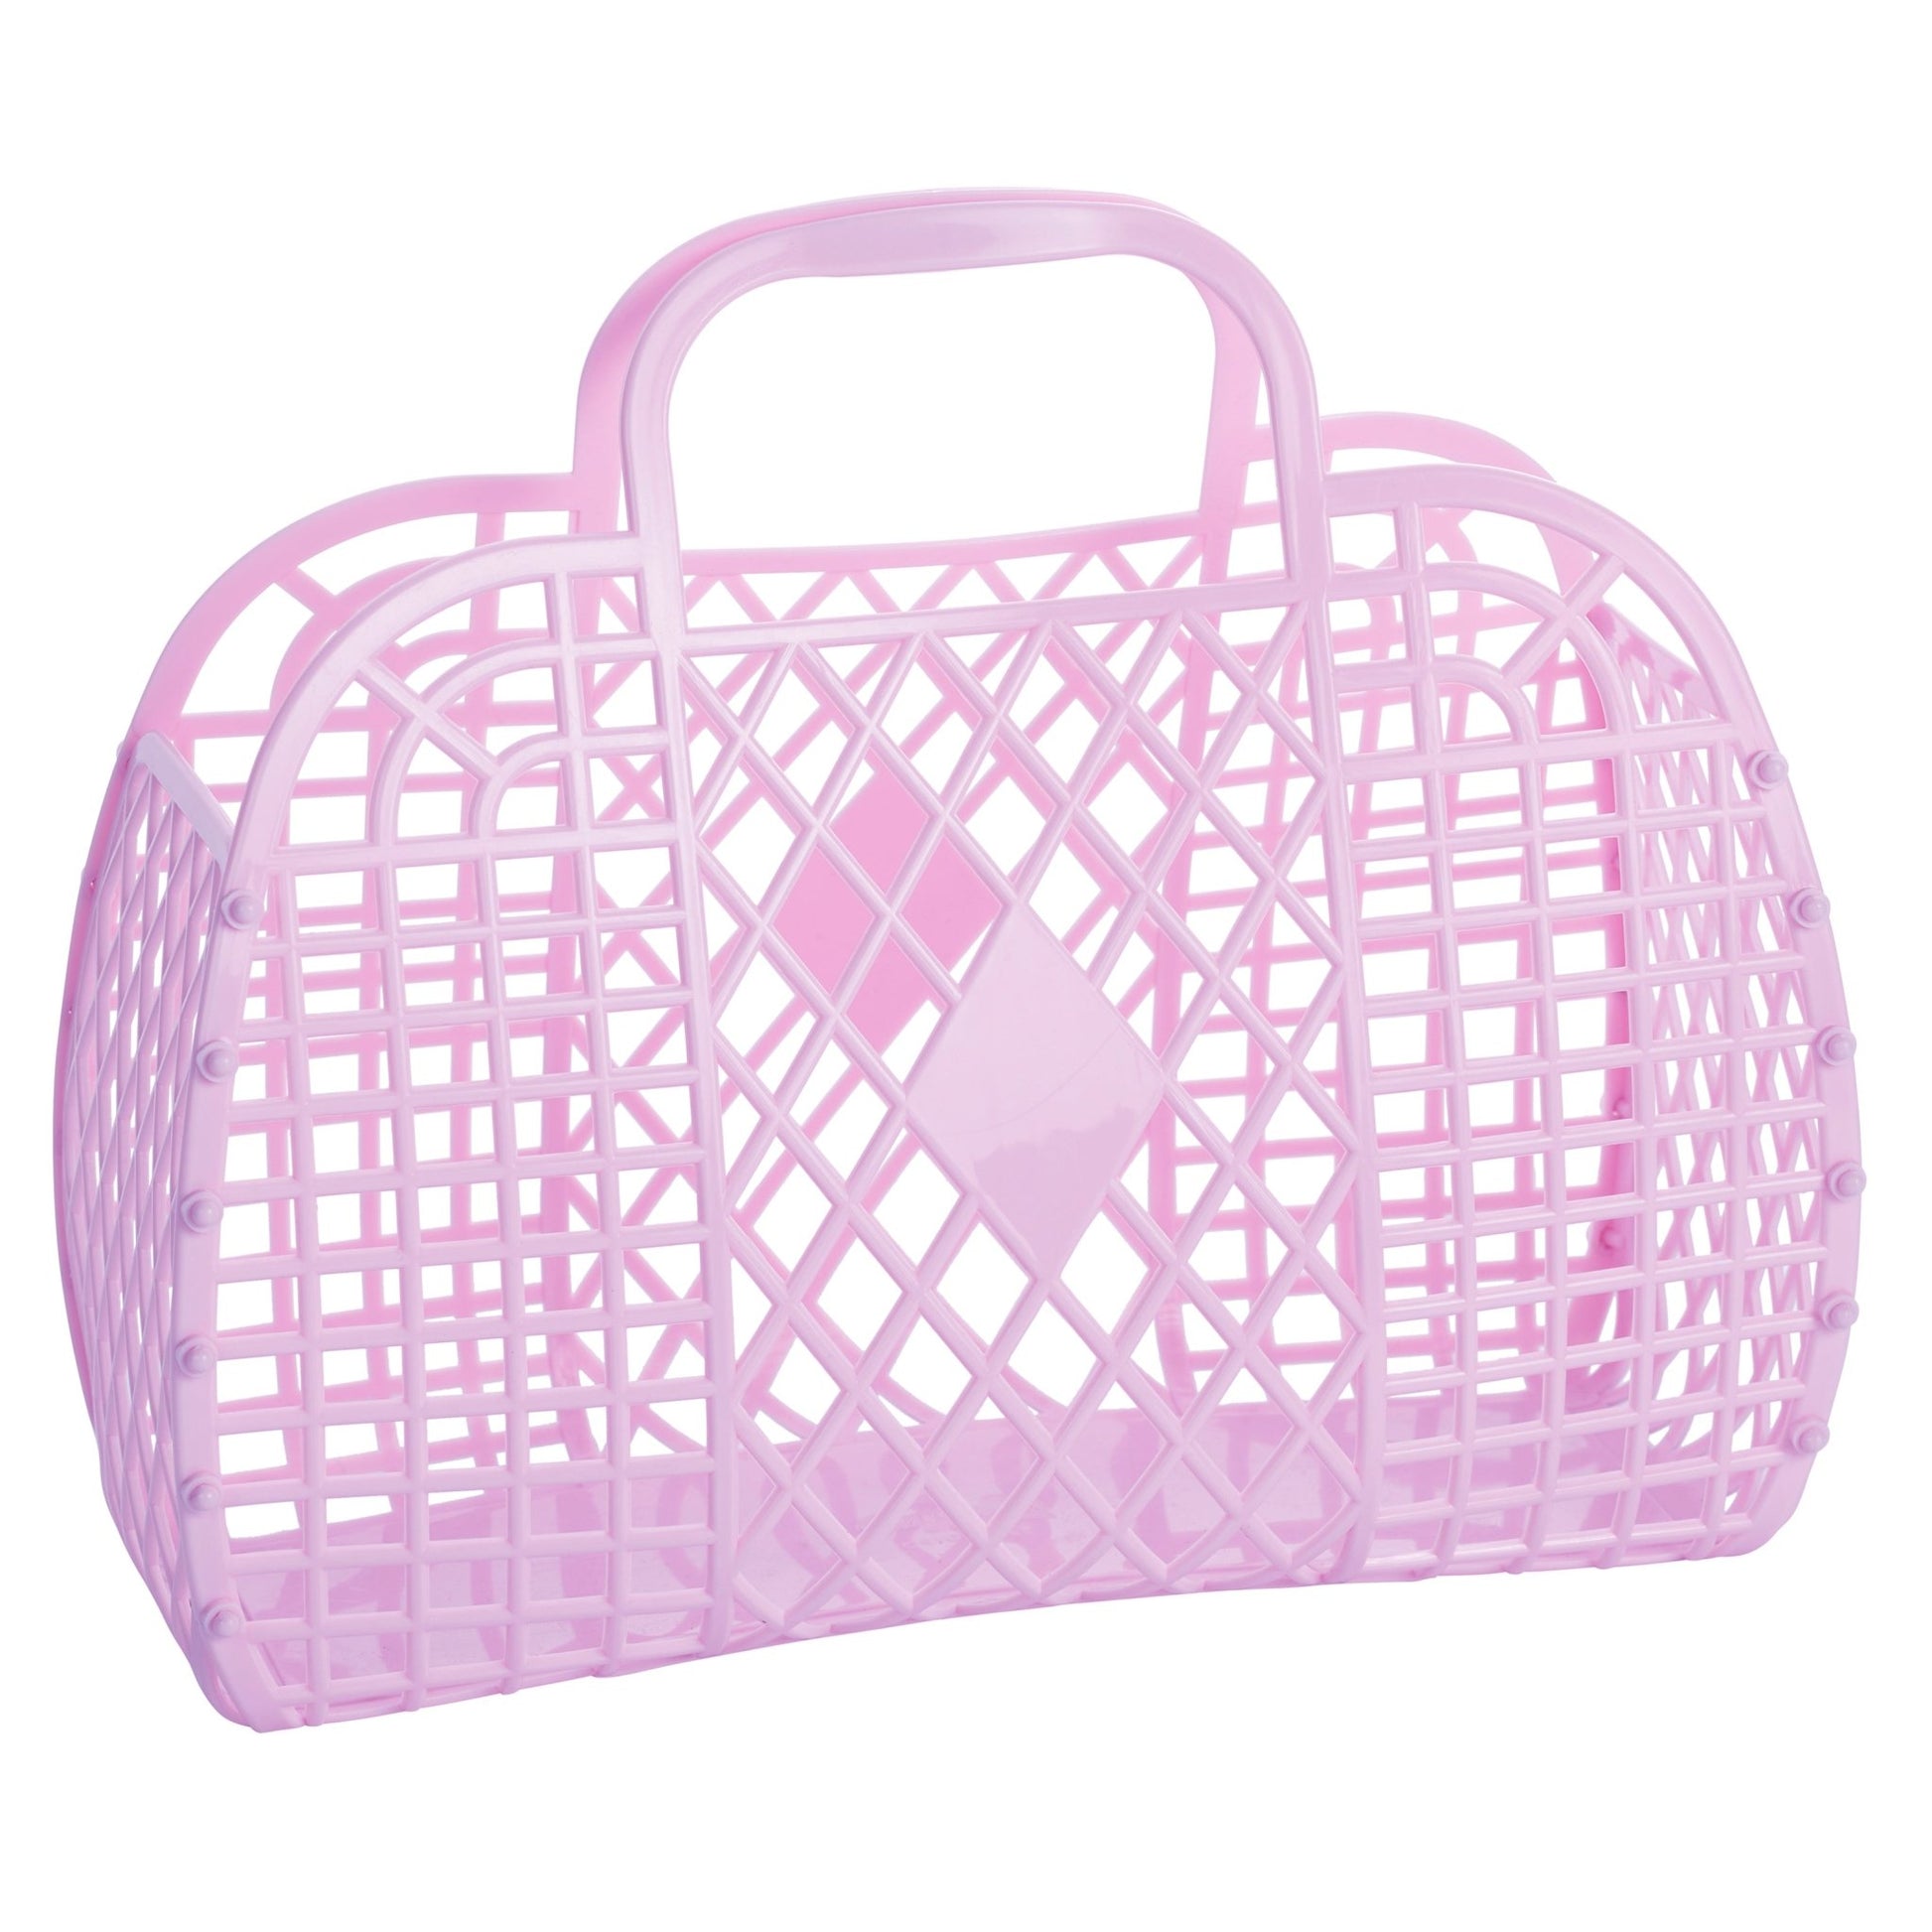 Retro Basket - Large Lilac - Rockamilly-Bags & Purses-Vintage